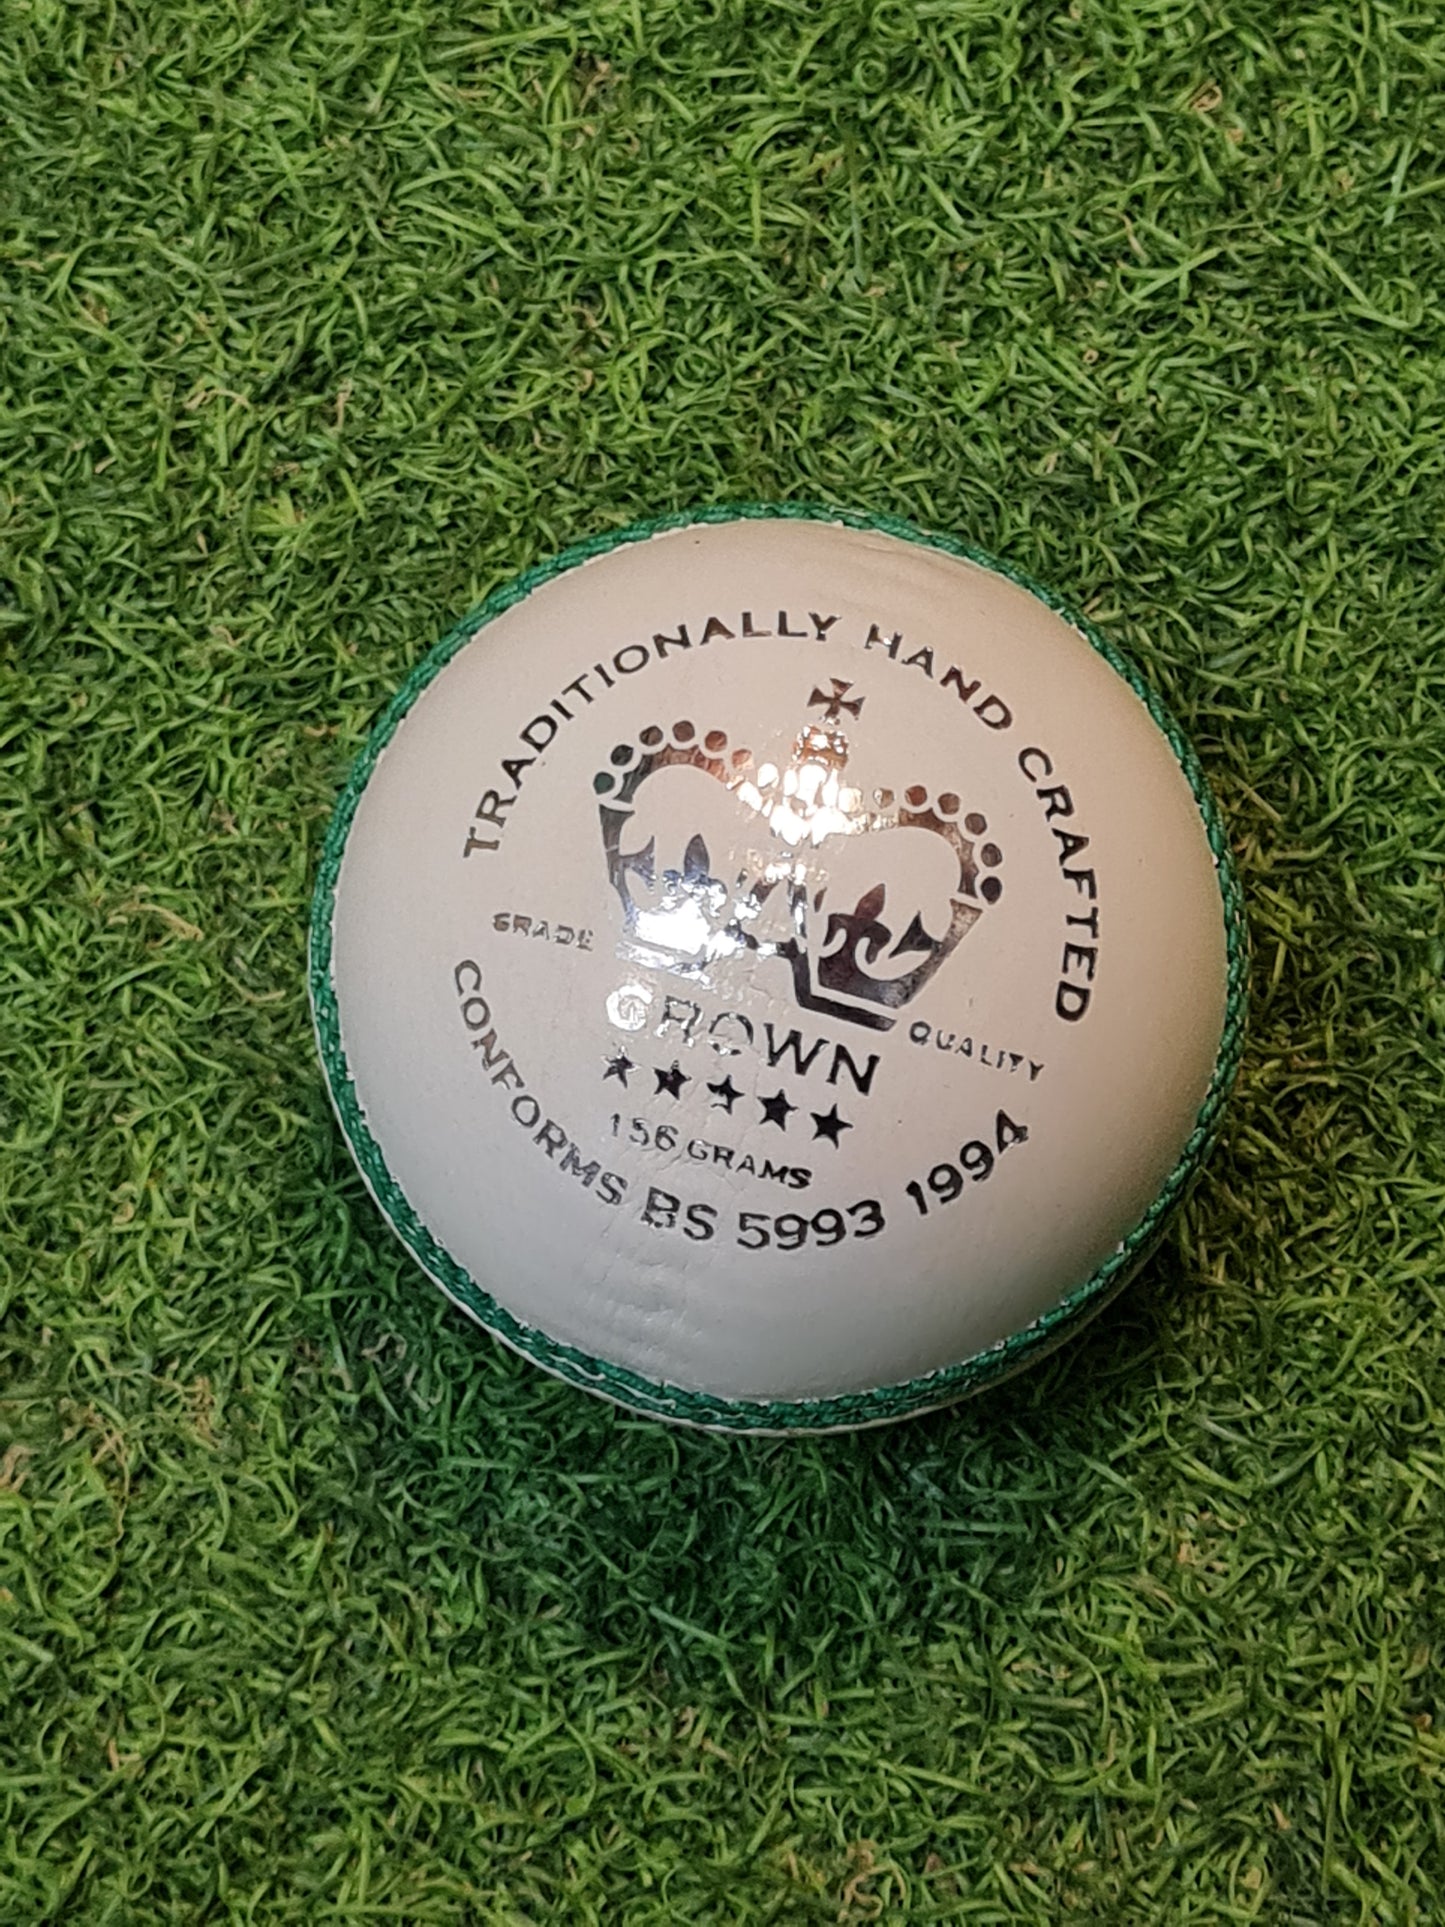 Gray Nicolls Crown 5 Star White 156g Cricket Ball